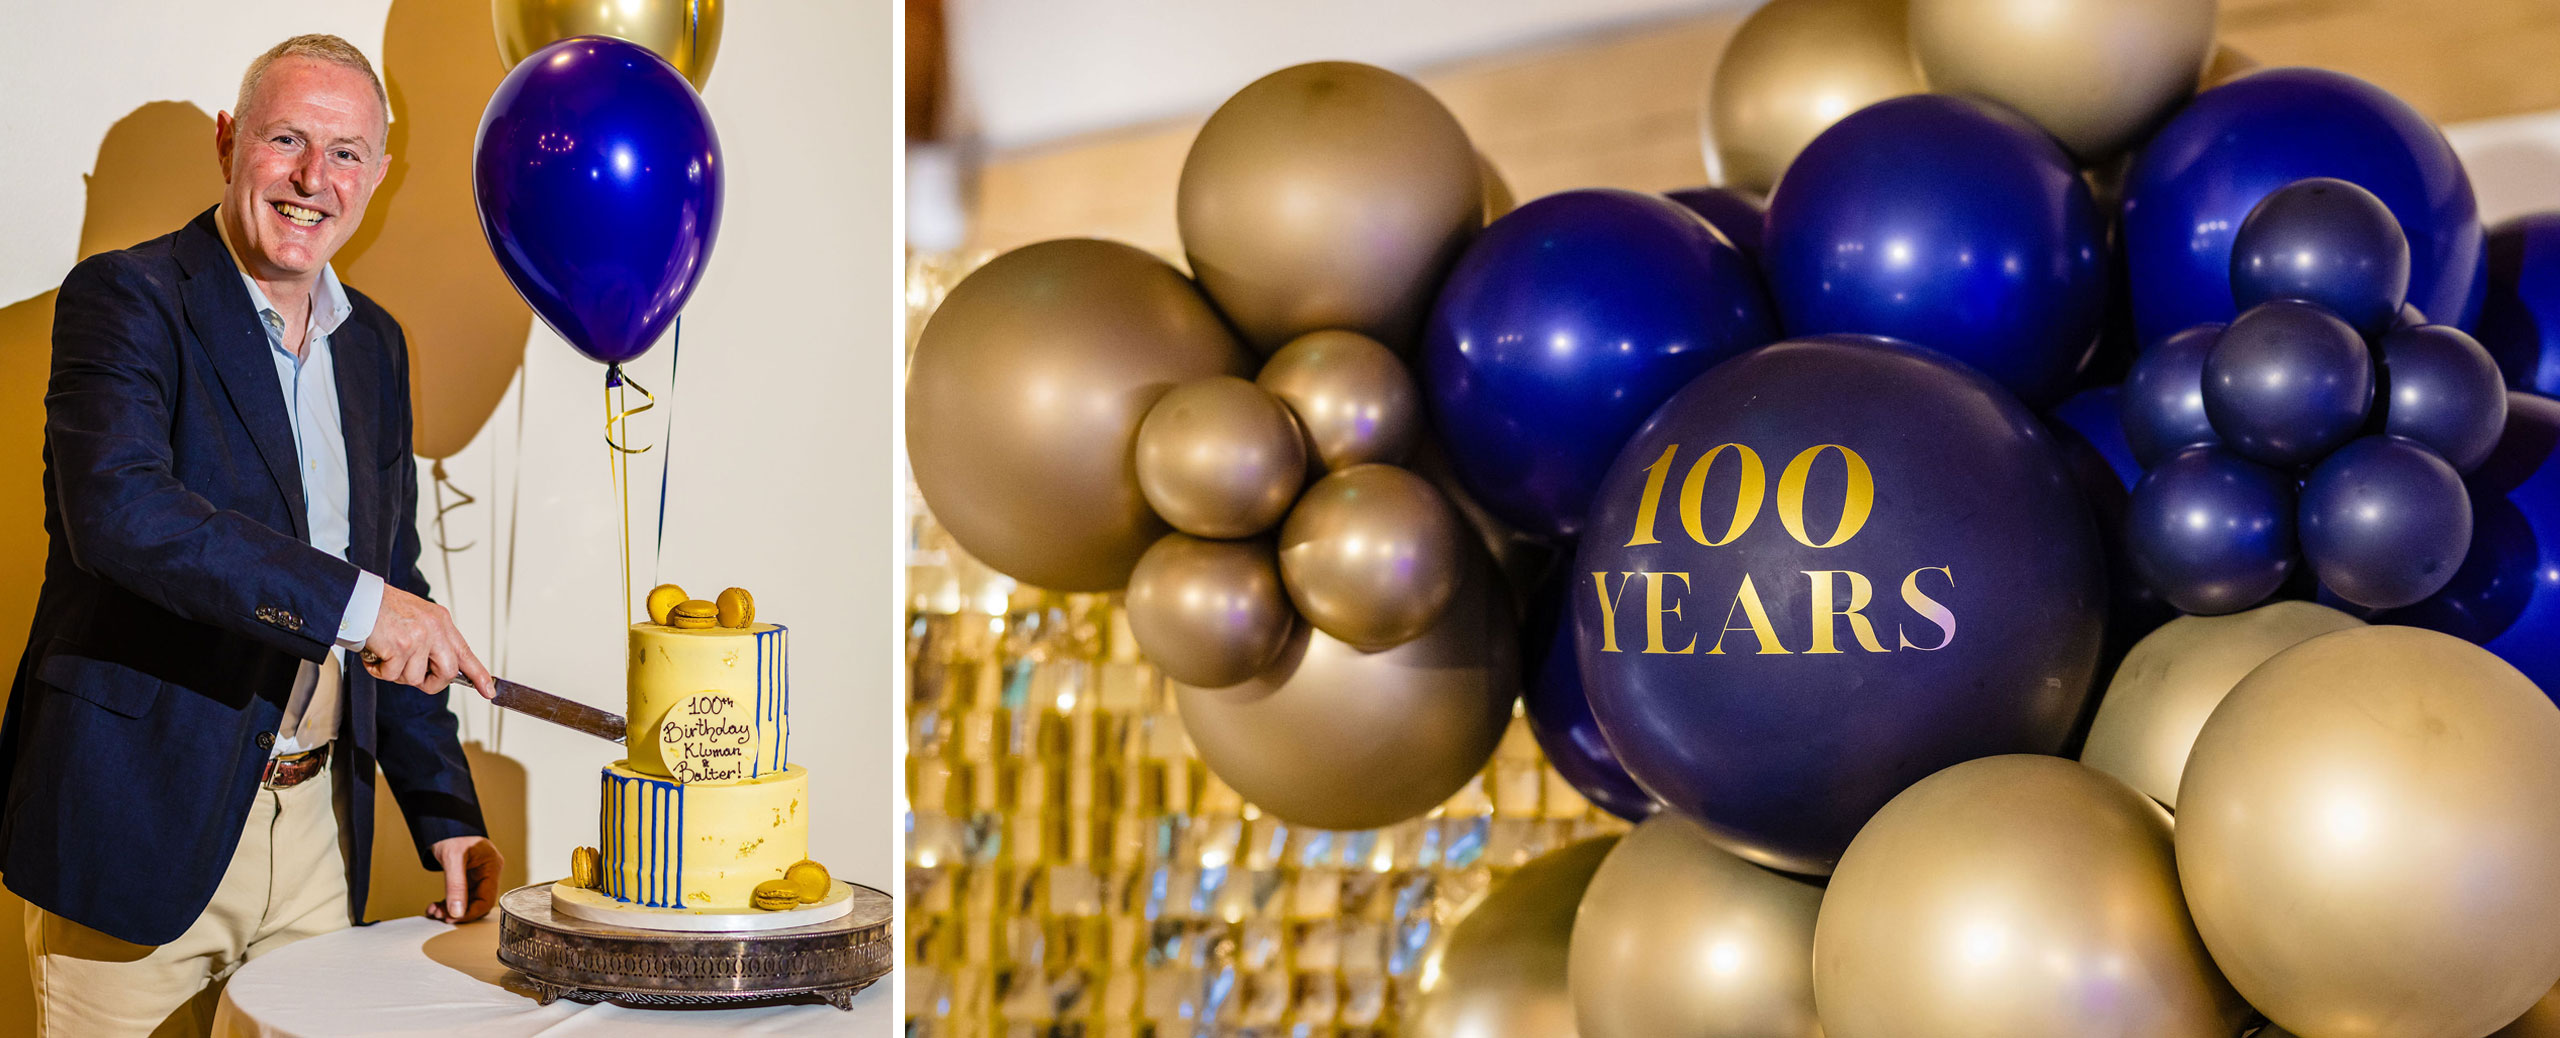 Bakery Ingredients - Kluman & Balter Celebrates its Centenary!